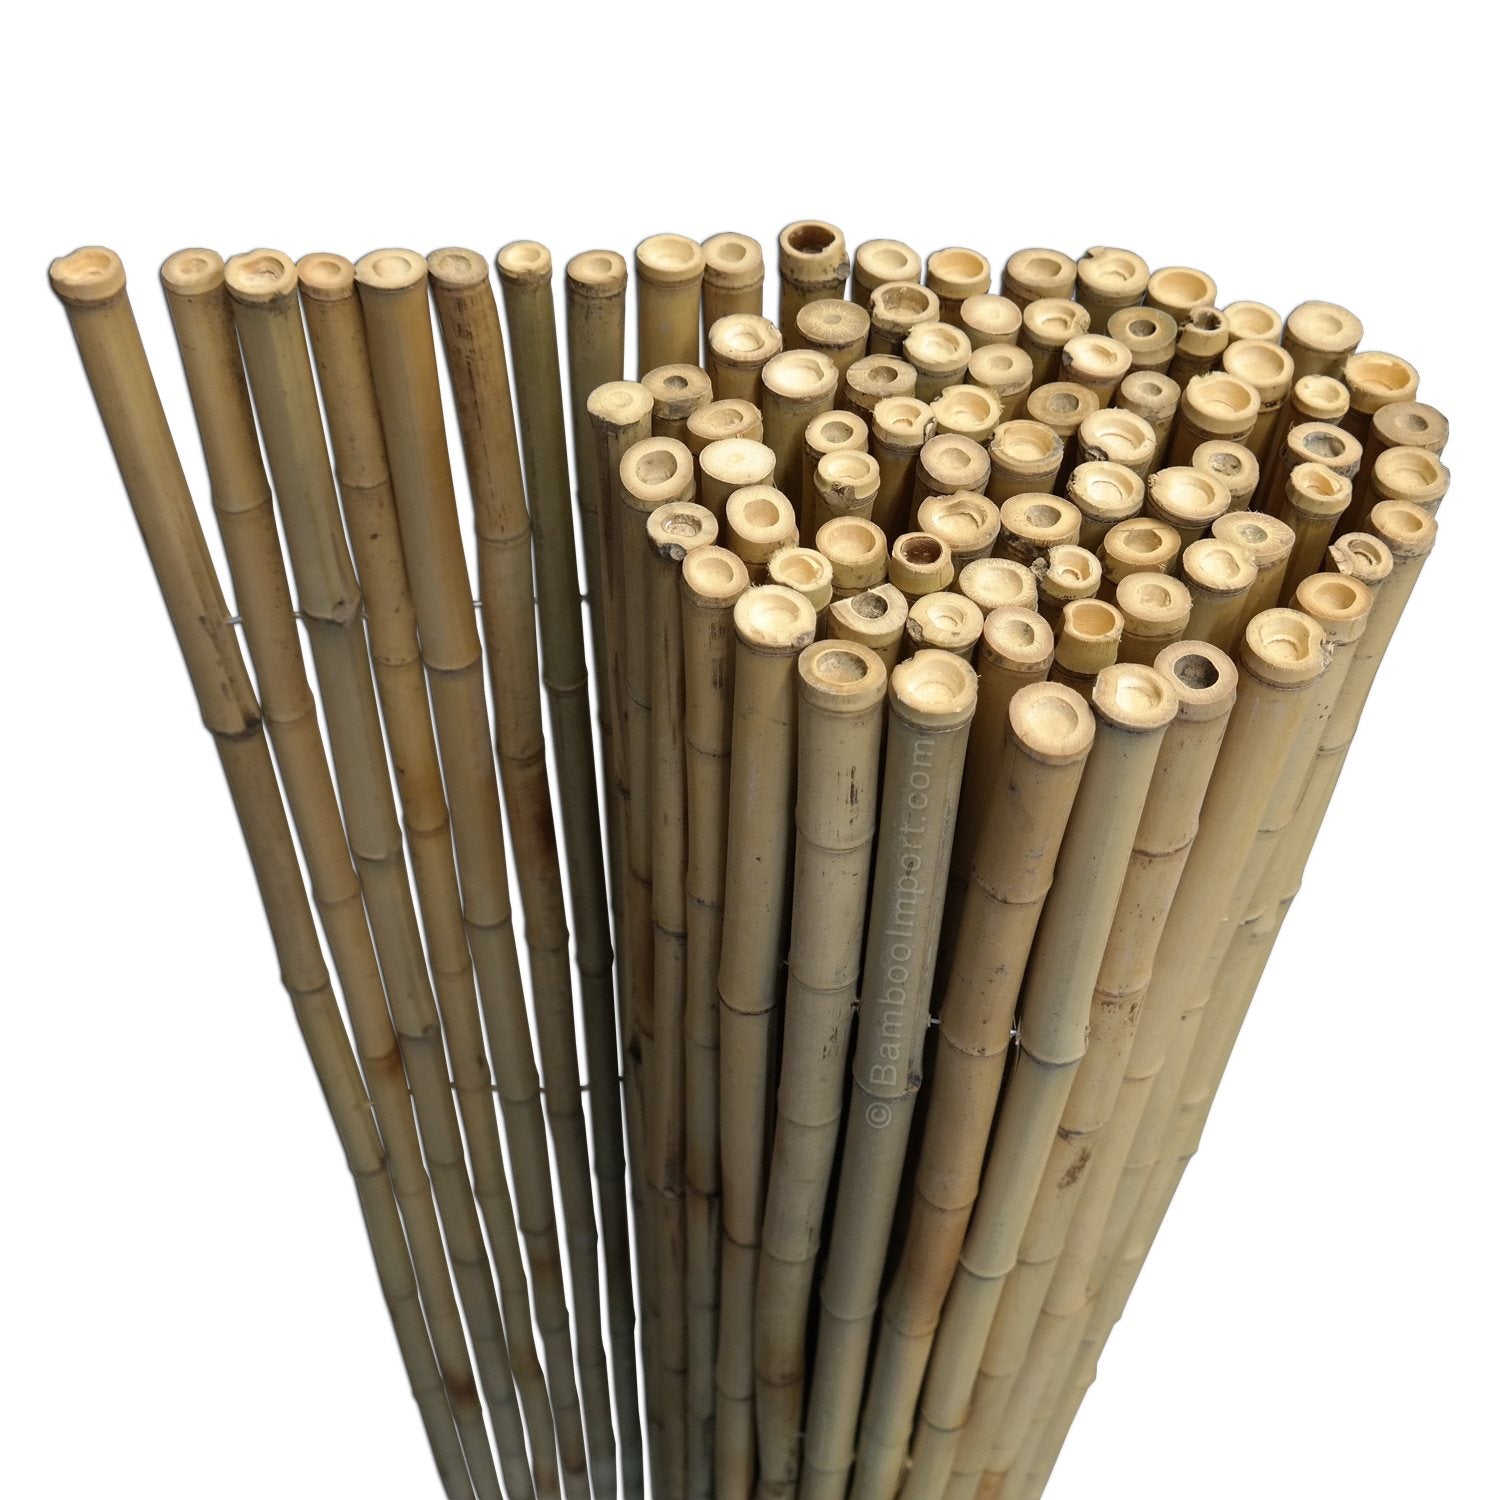 Bamboo Fence Roll Regular Natural